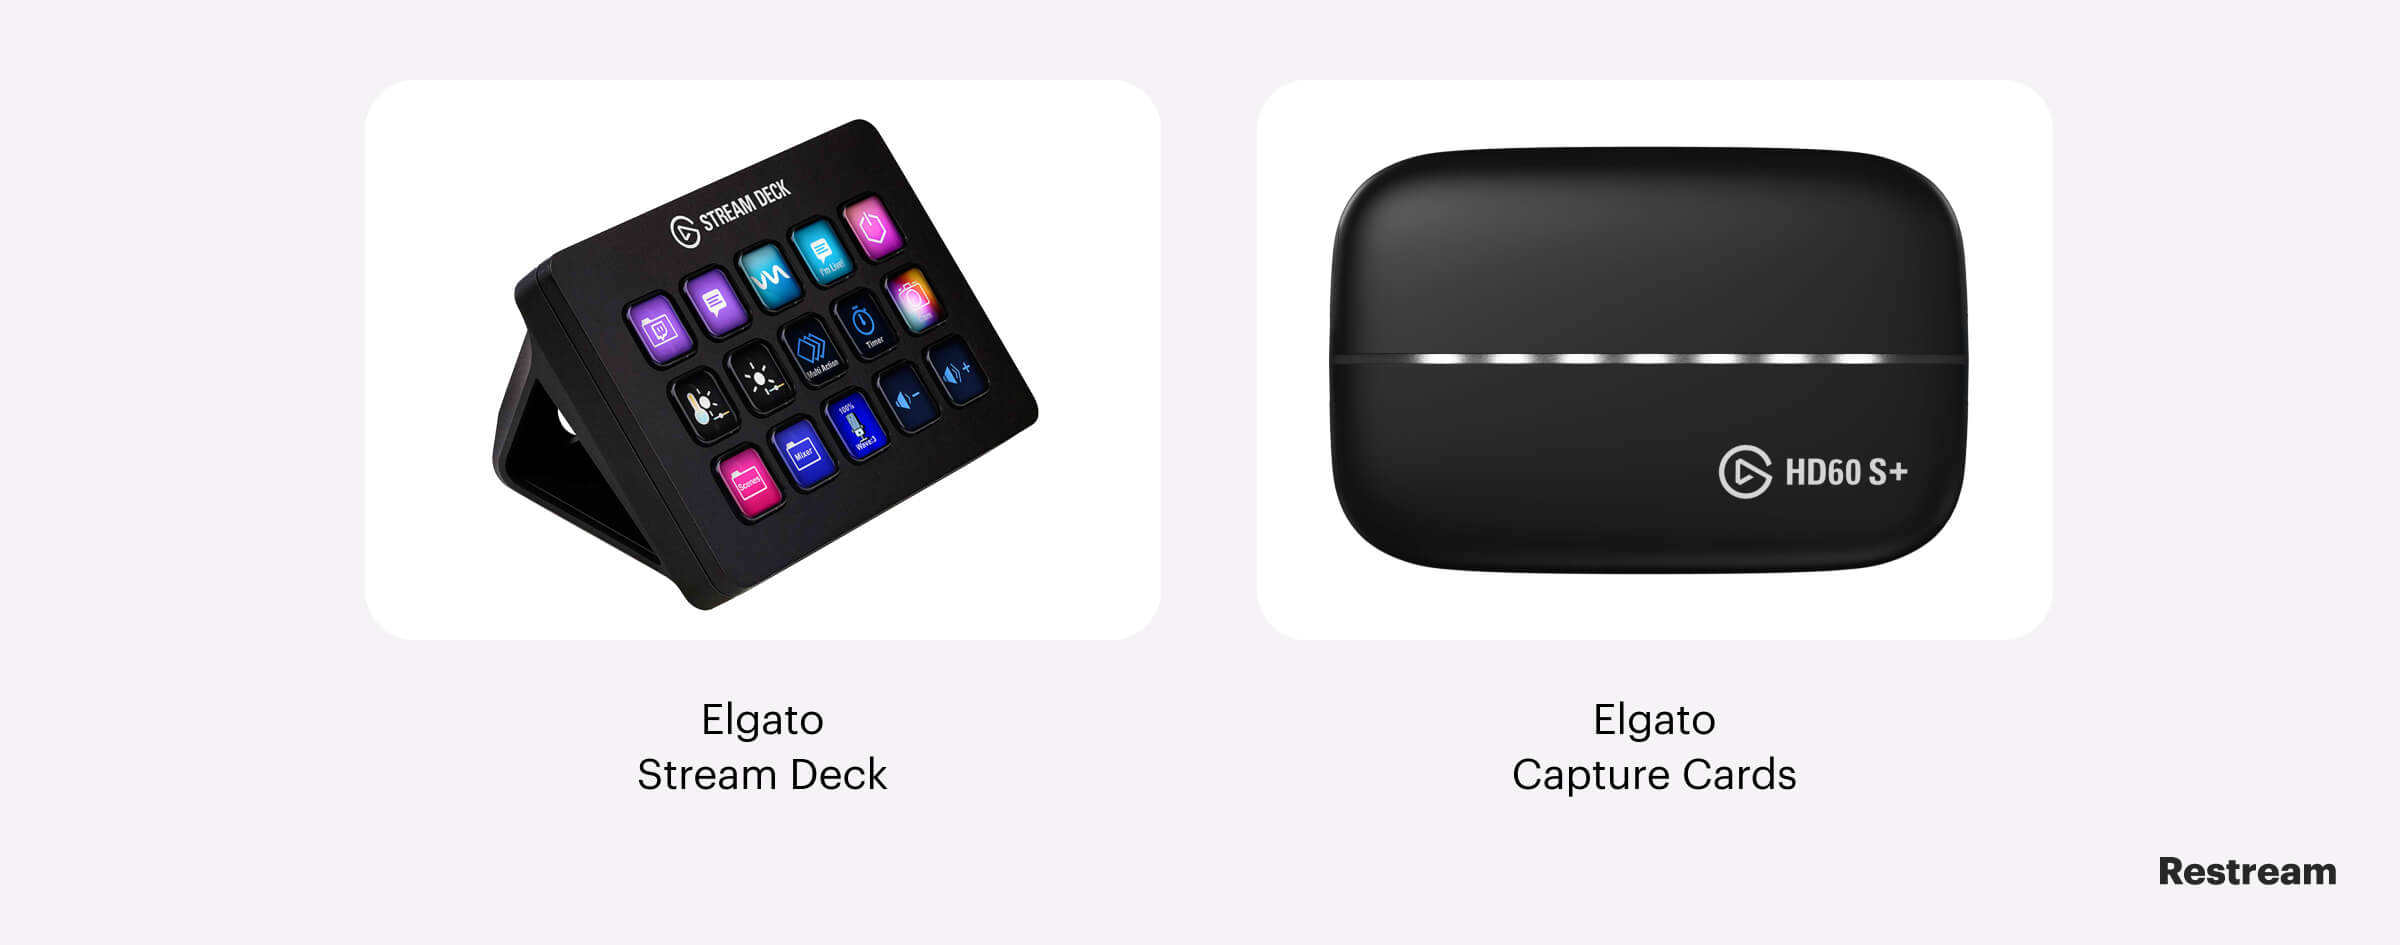  Elgato Stream Deck and Capture Card